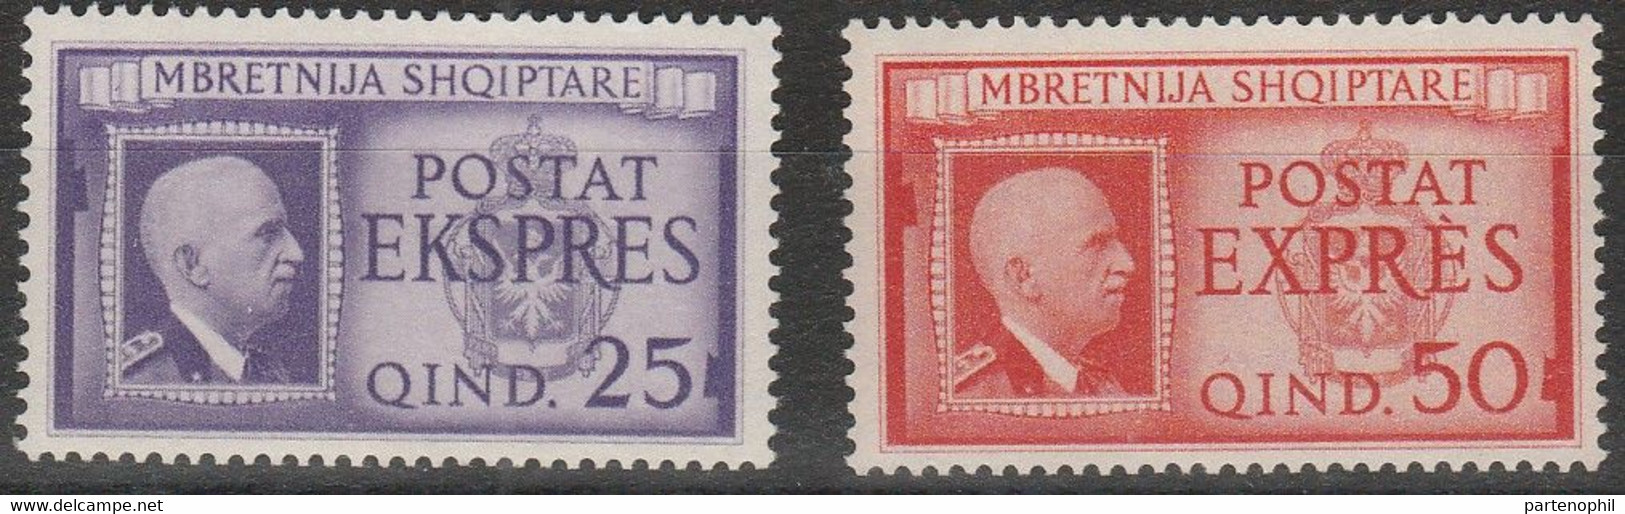 281 Occupazione Italiana Albania  Espressi - 1940 - Vittorio Emanuele II N. 1/2. Cat. € 110,00. SPL MNH - Albanien